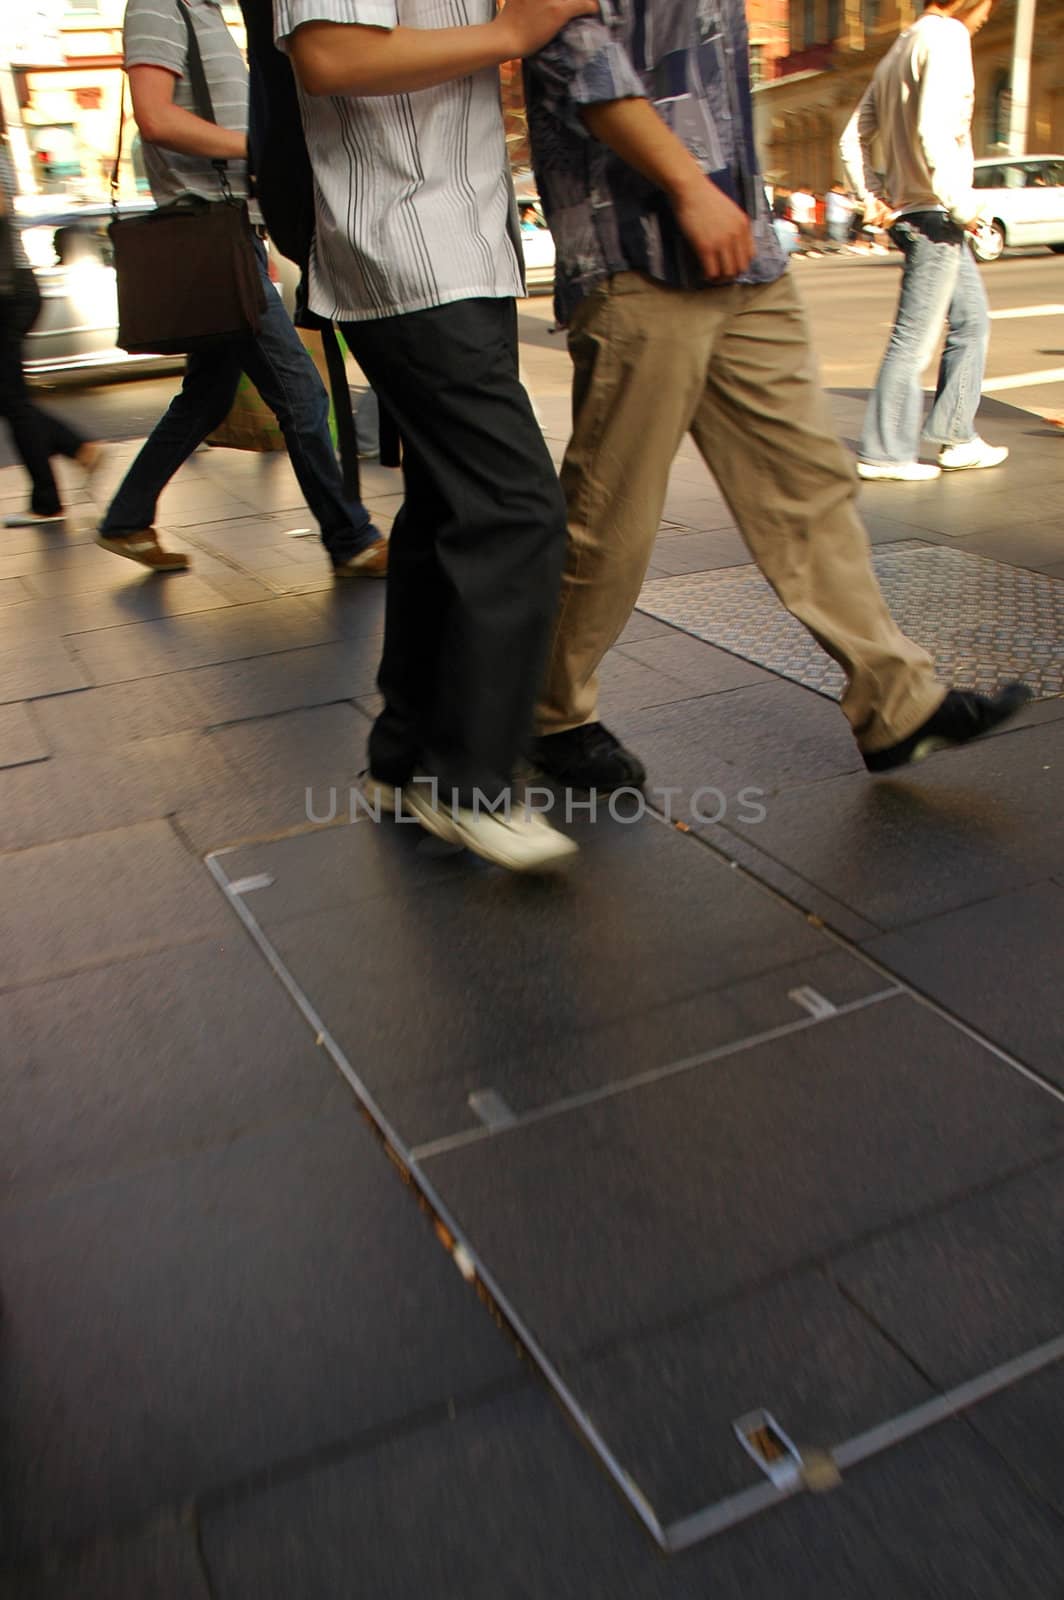 detail photo of several pedestrian feet, motion blur